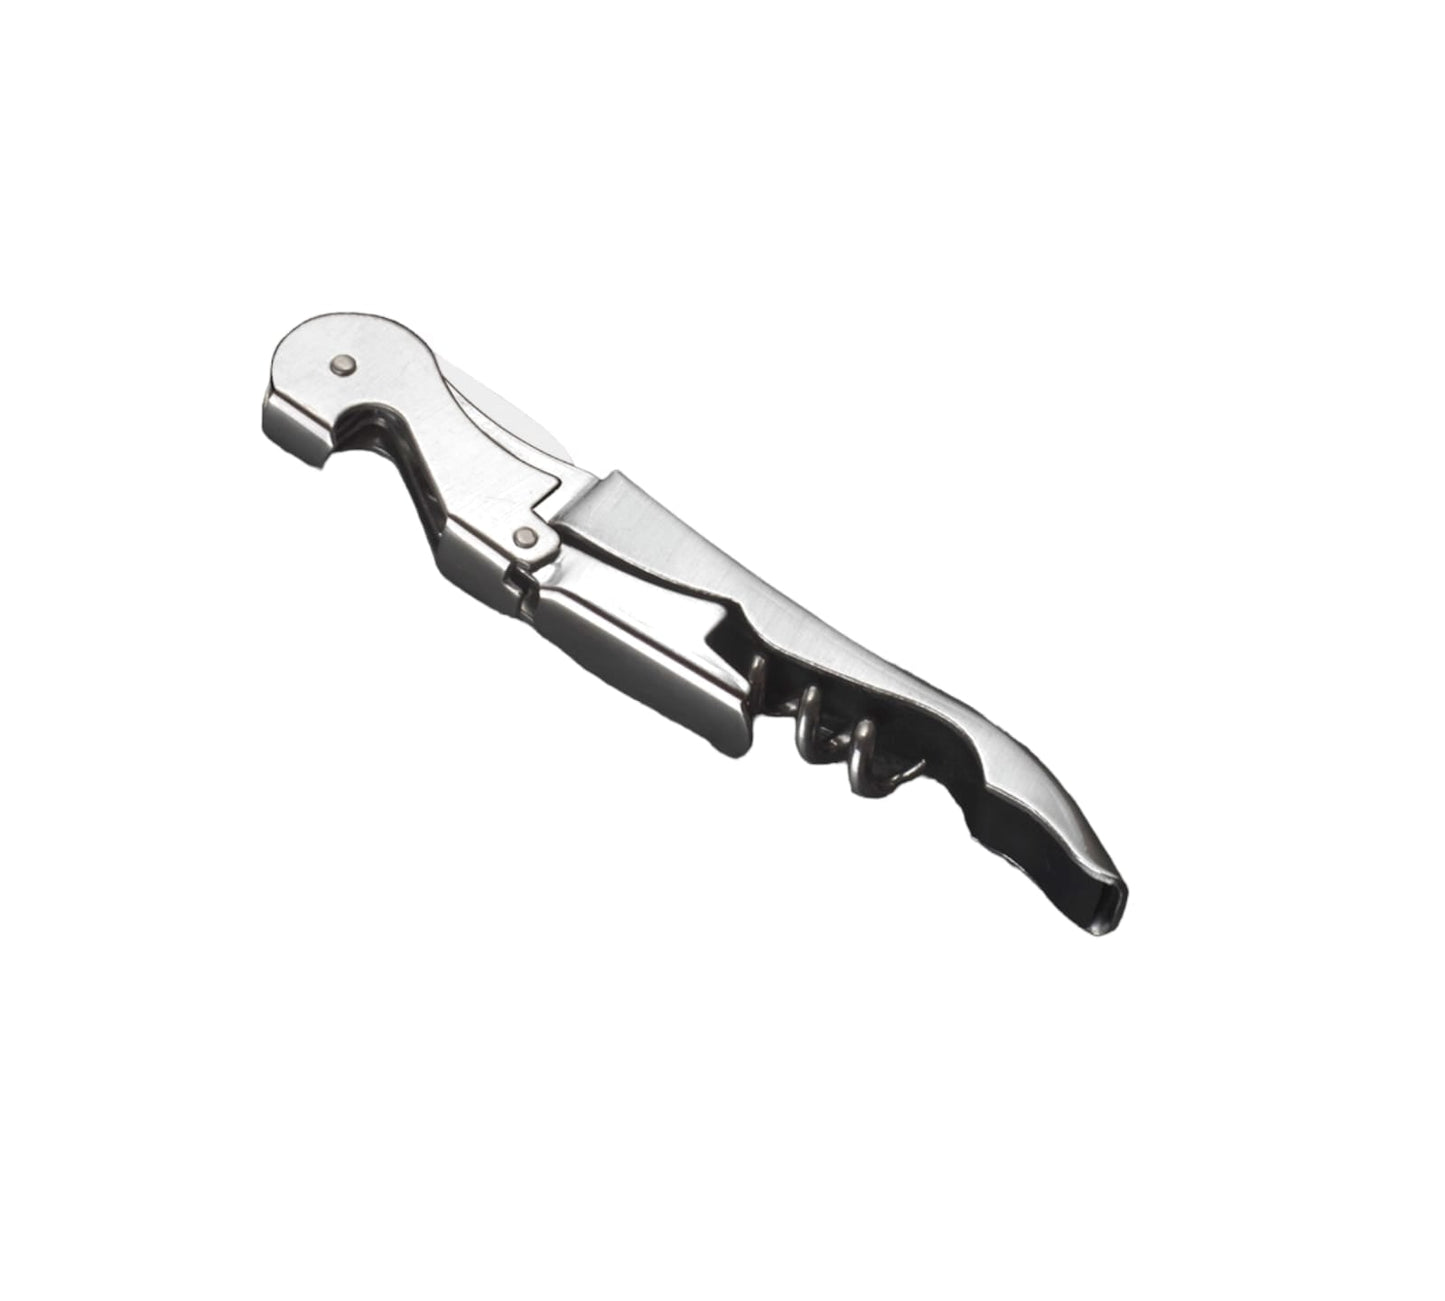 Stainless steel corkscrew wine opener